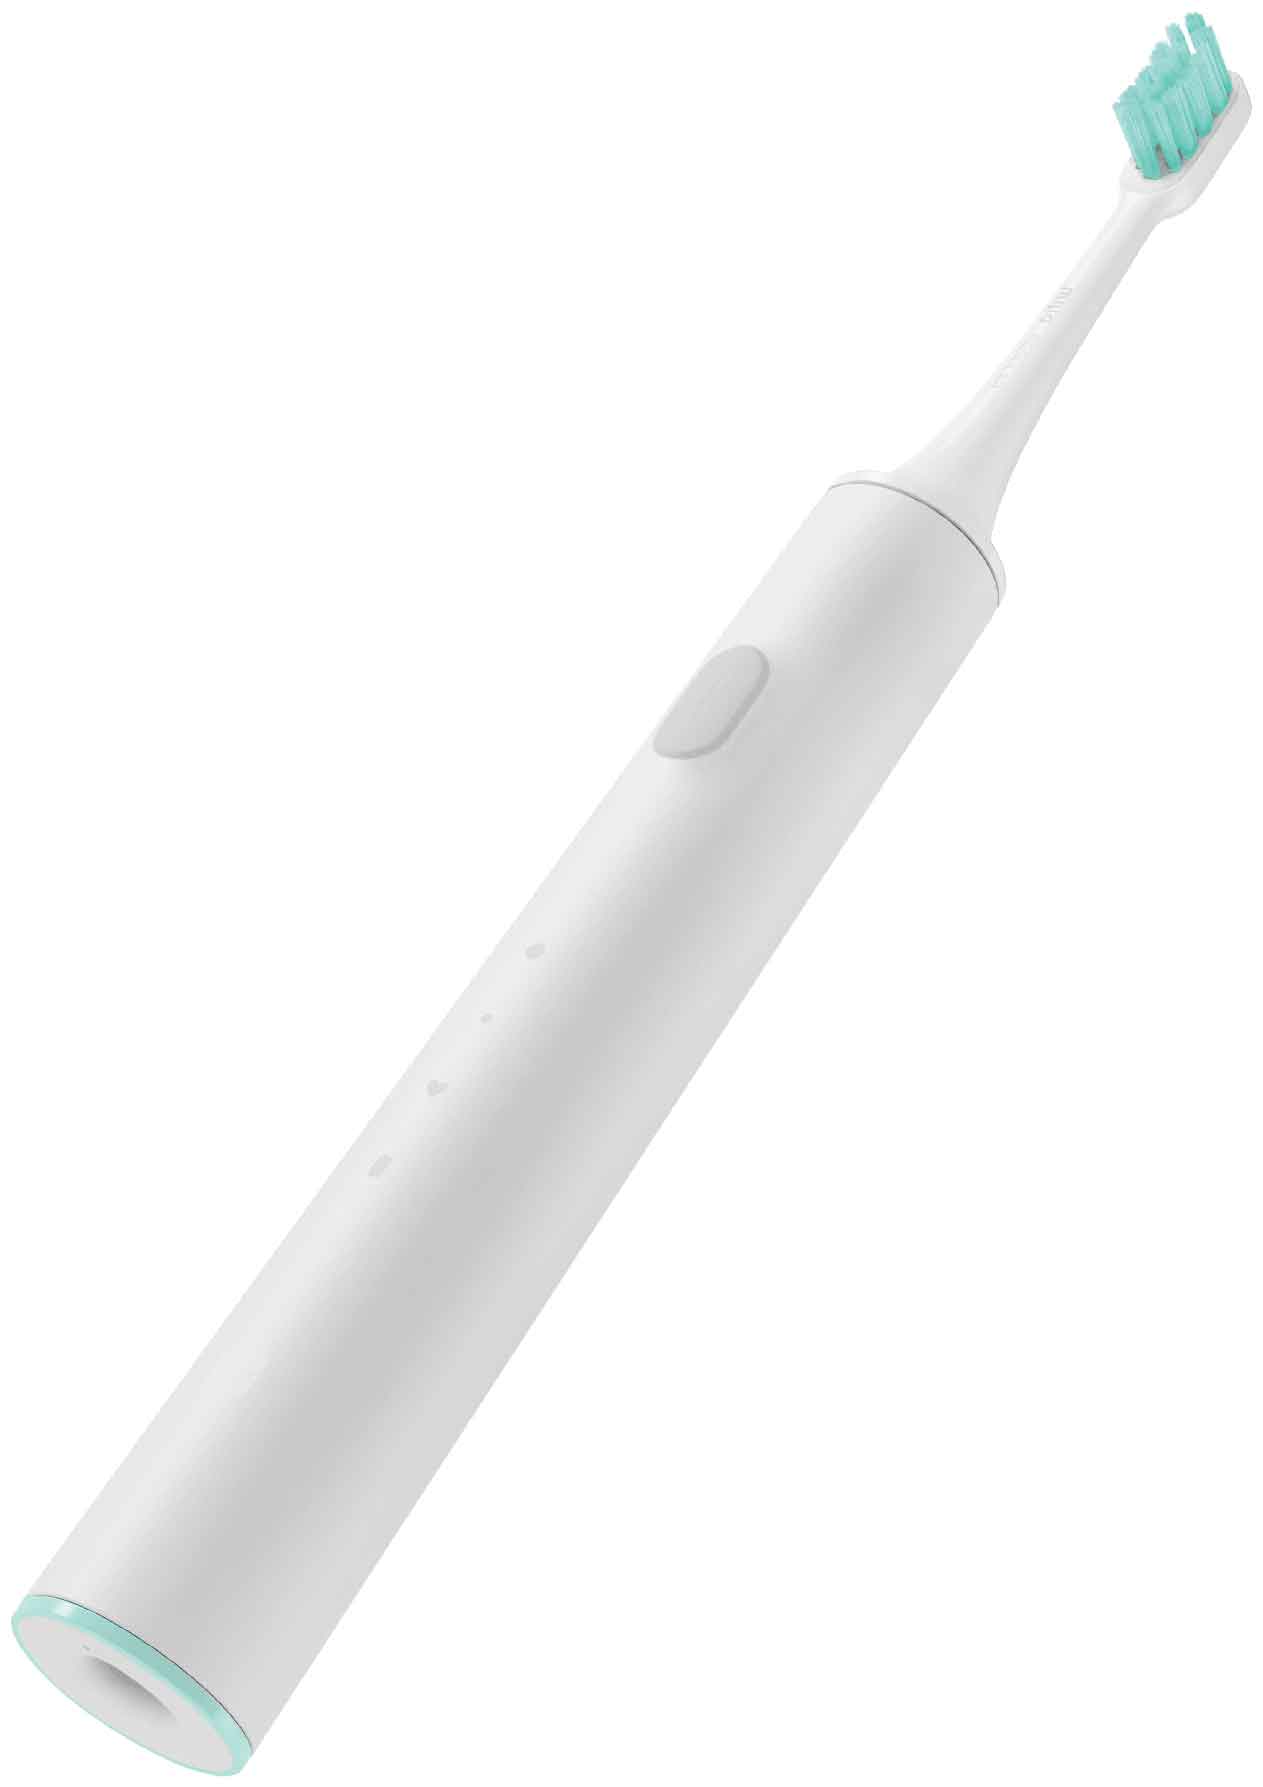 Электрическая зубная щетка в футляре Infly Electric Toothbrush with travel case PT02 White